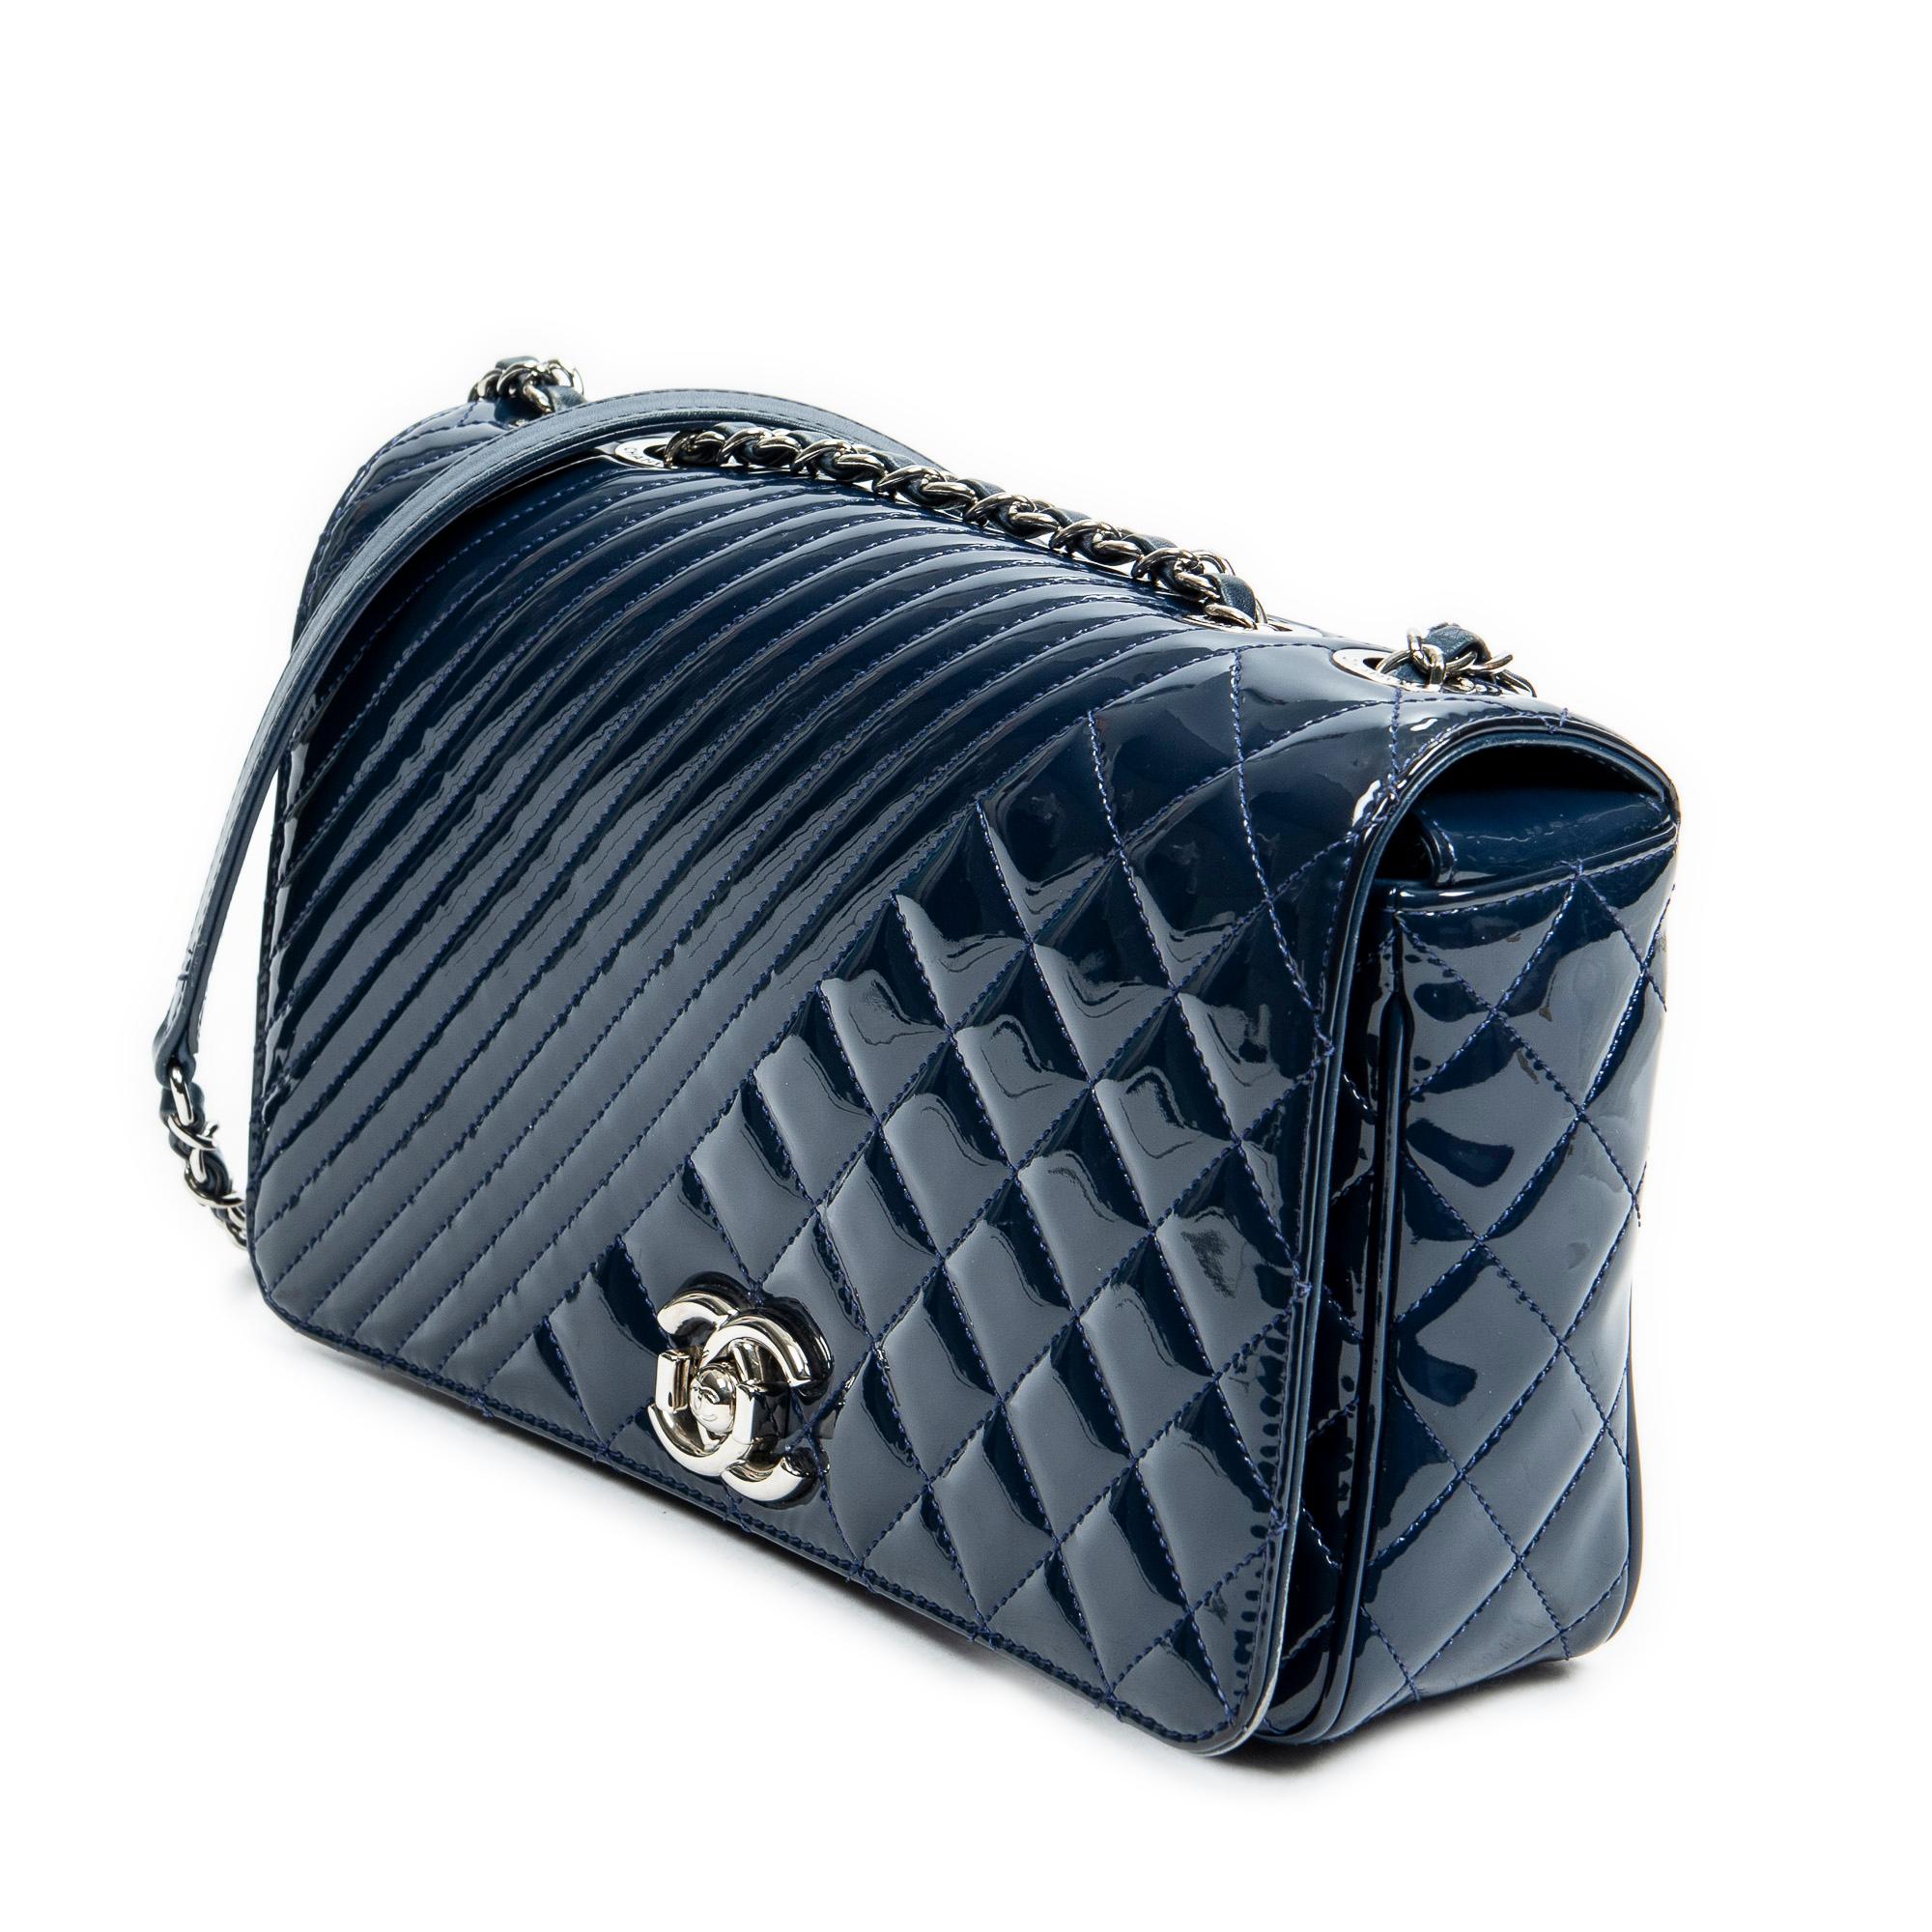 Chanel 2016 Blue CC Medium Coco Flap Bag In Excellent Condition For Sale In Atlanta, GA